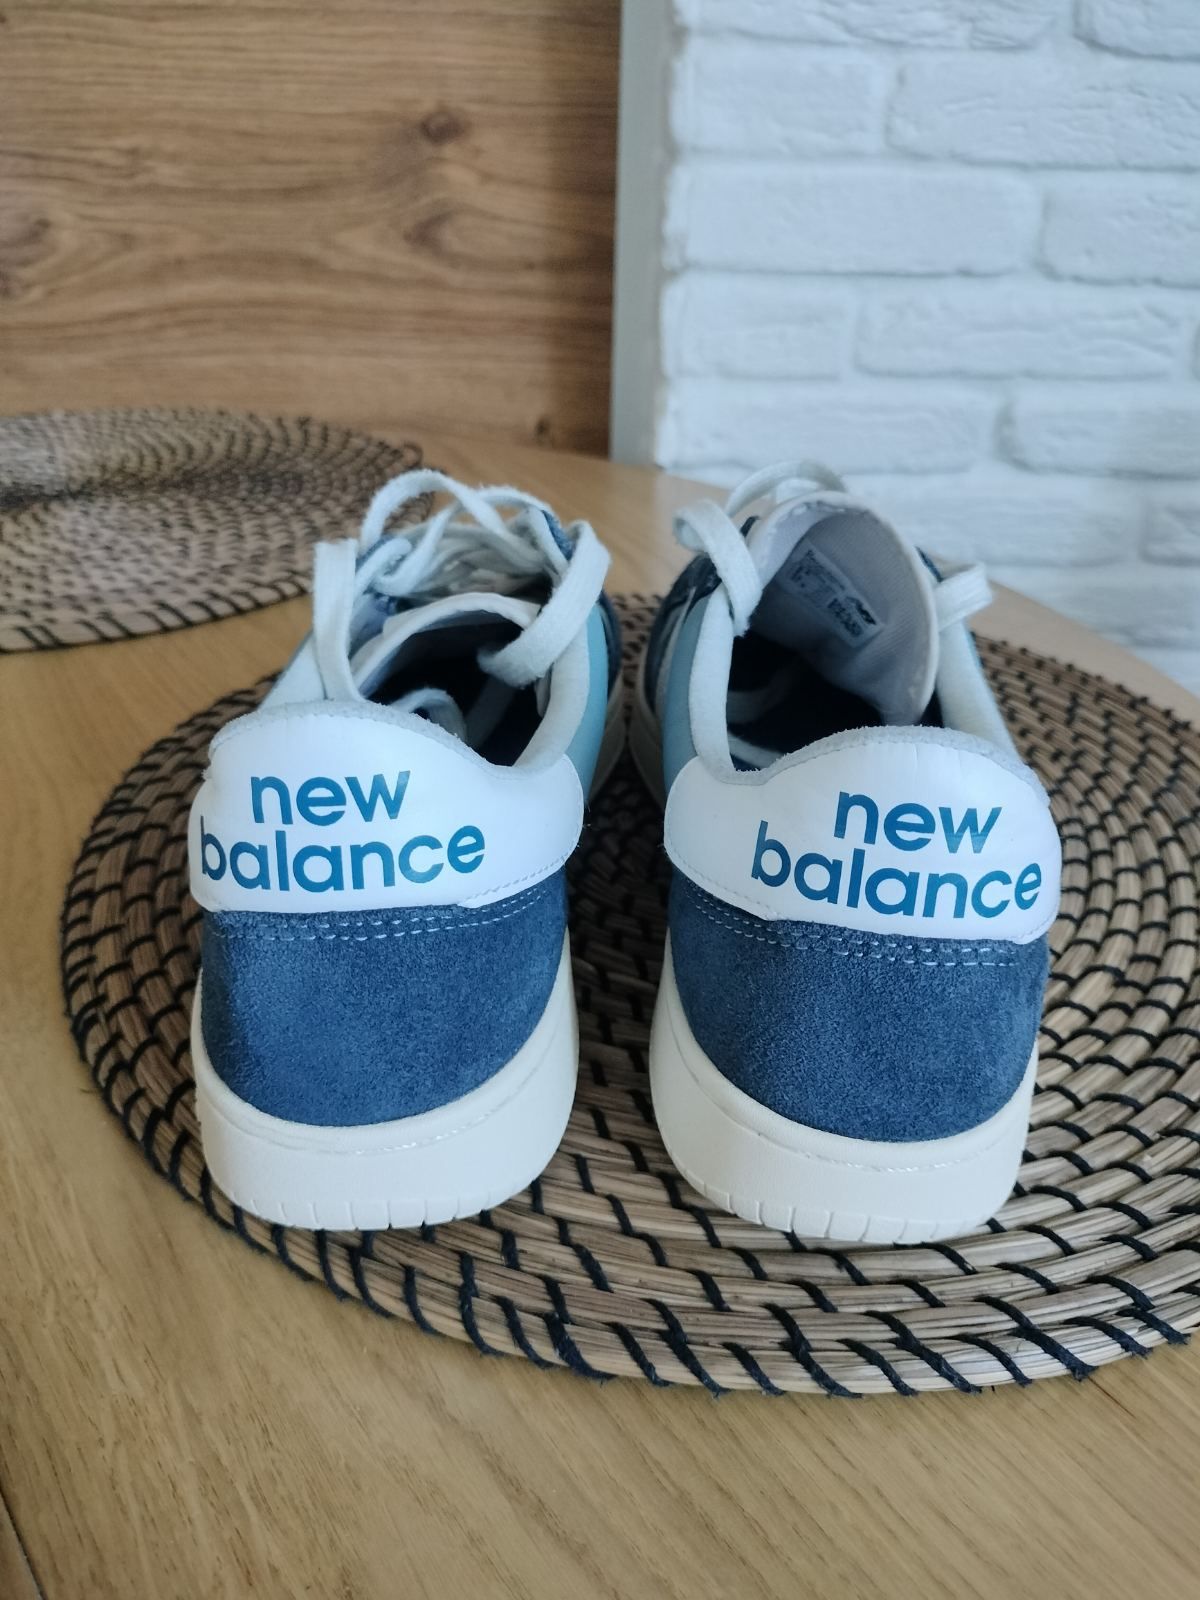 New balance ASICS Adidas